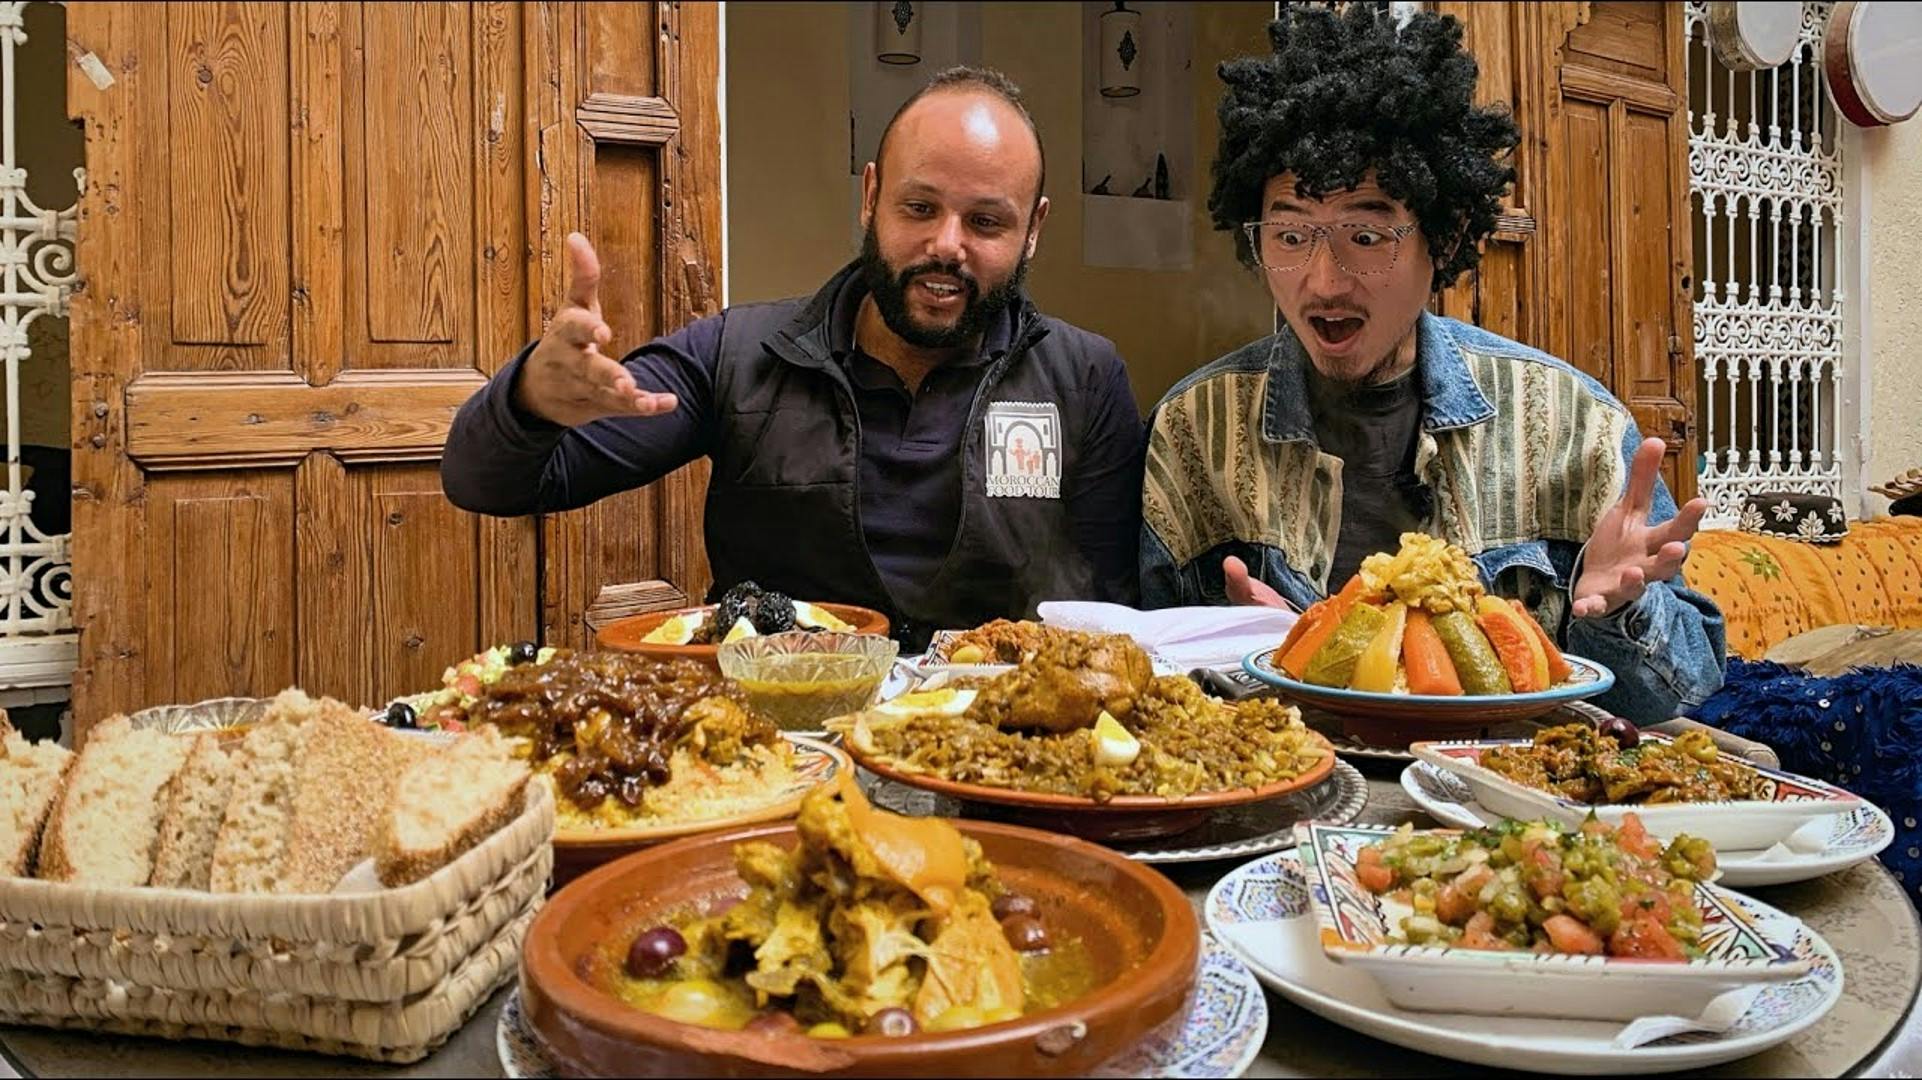 Esperienza di degustazione di cibo a Rabat